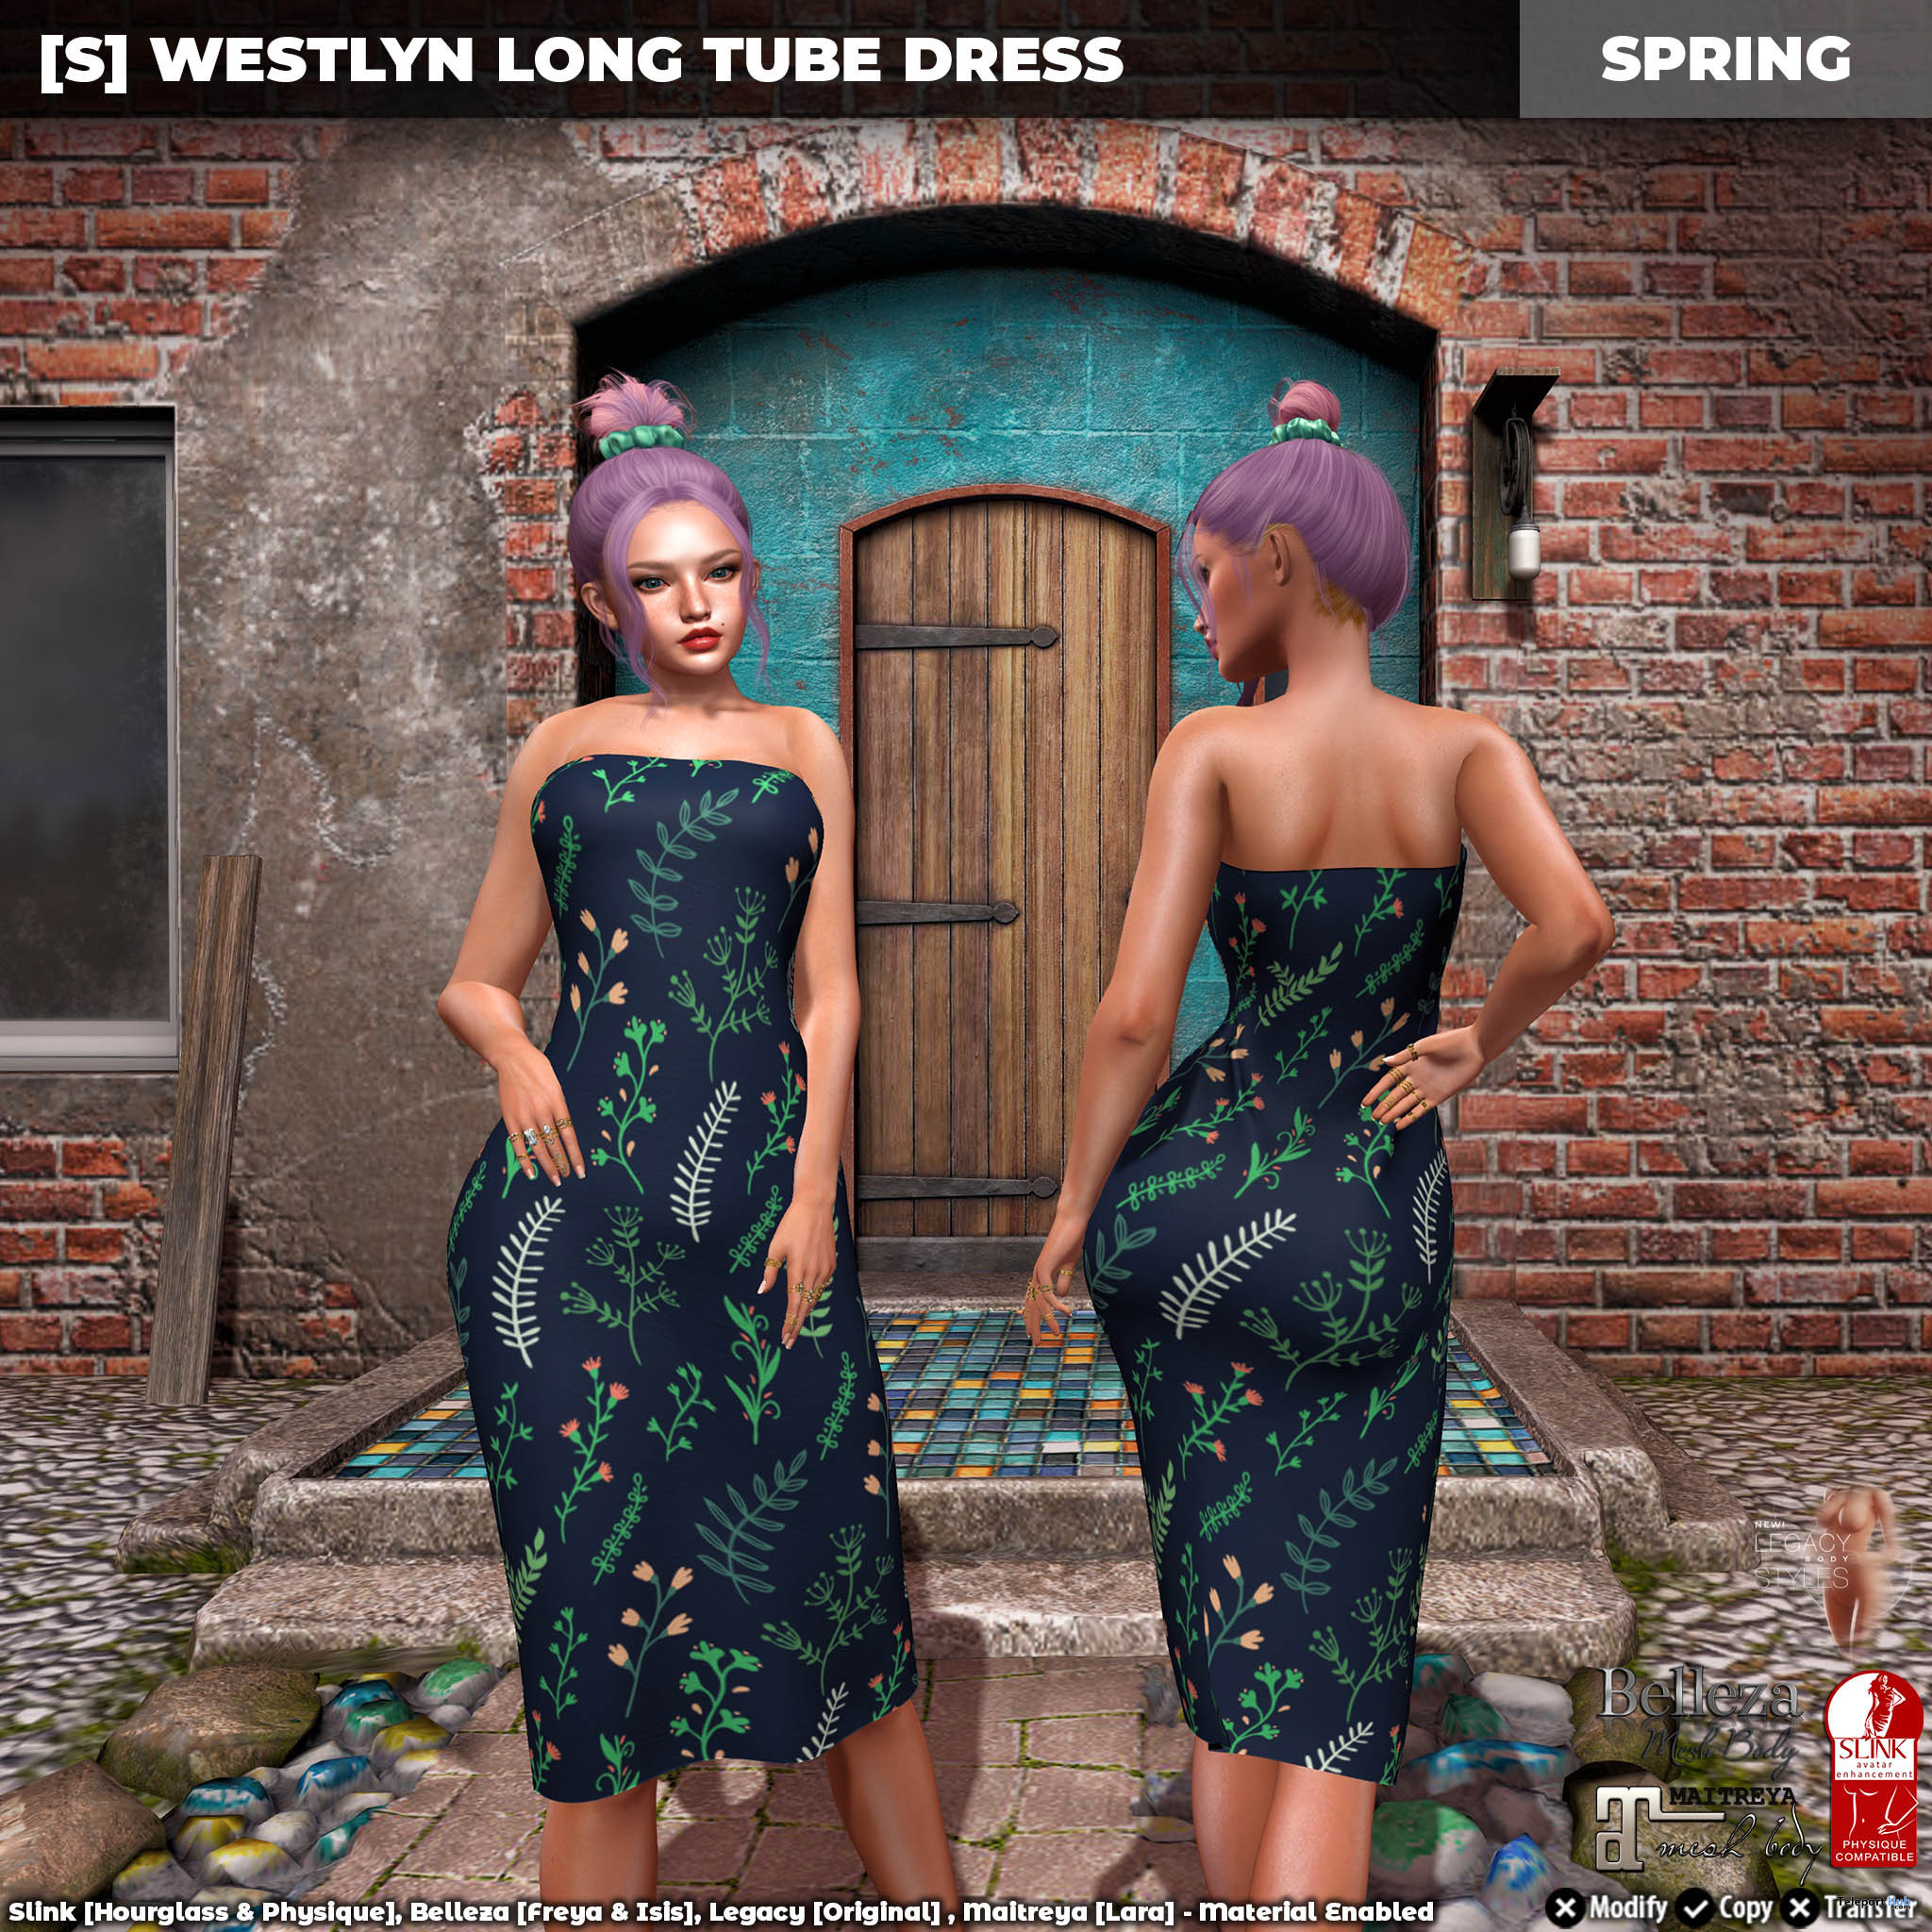 New Release: [S] Westlyn Long Tube Dress by [satus Inc] - Teleport Hub - teleporthub.com